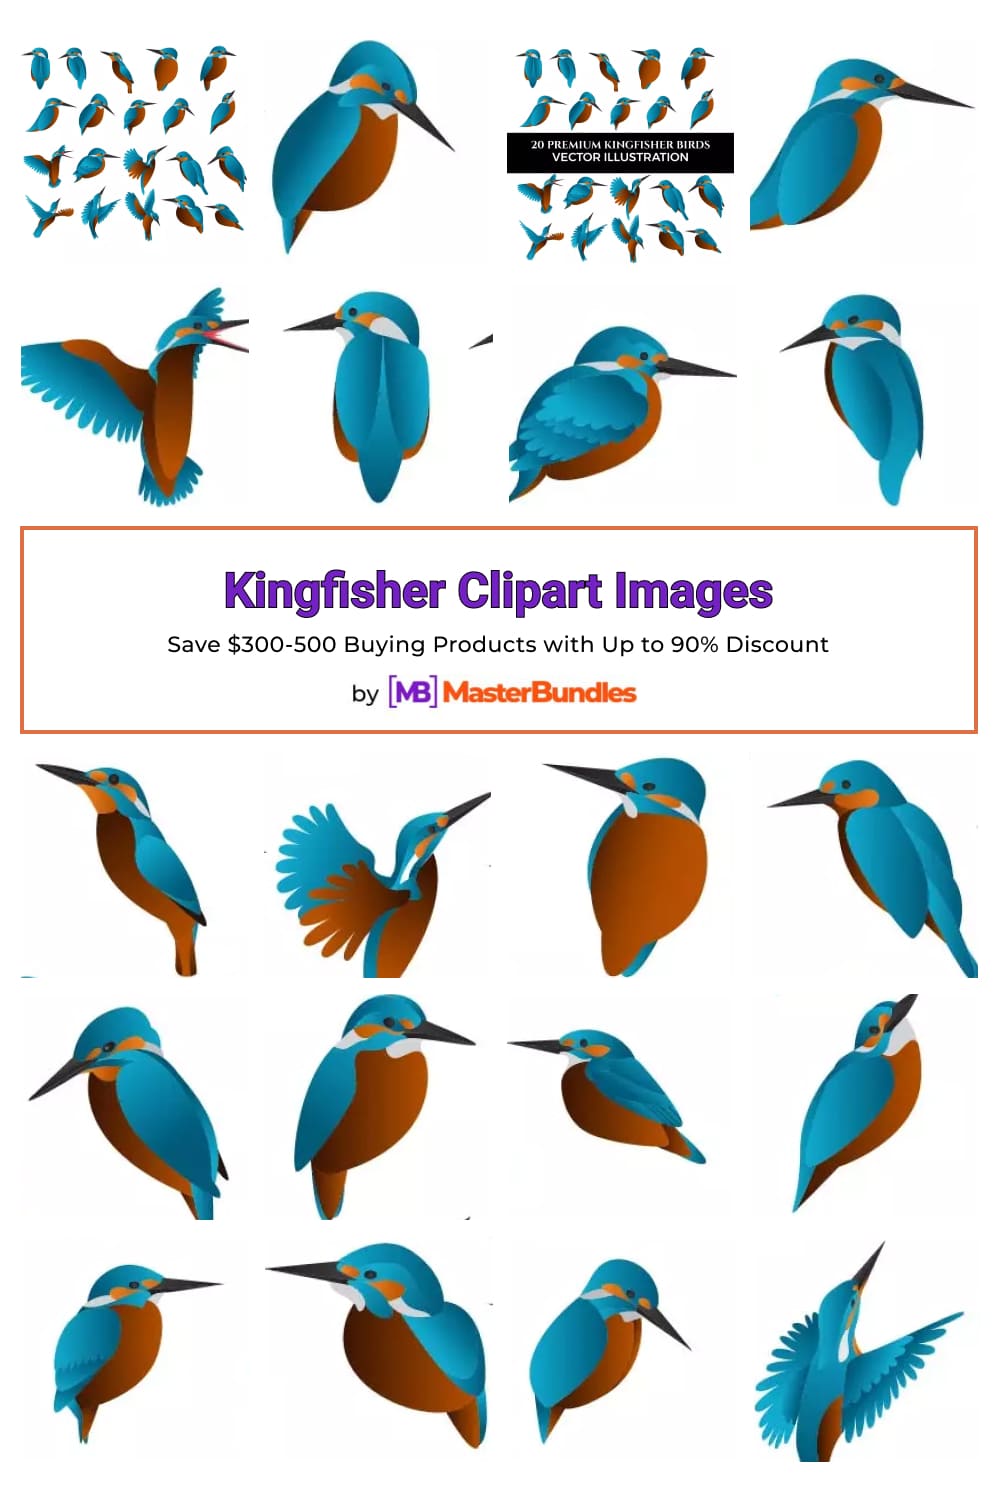 Kingfisher Clipart Images Pinterest image.